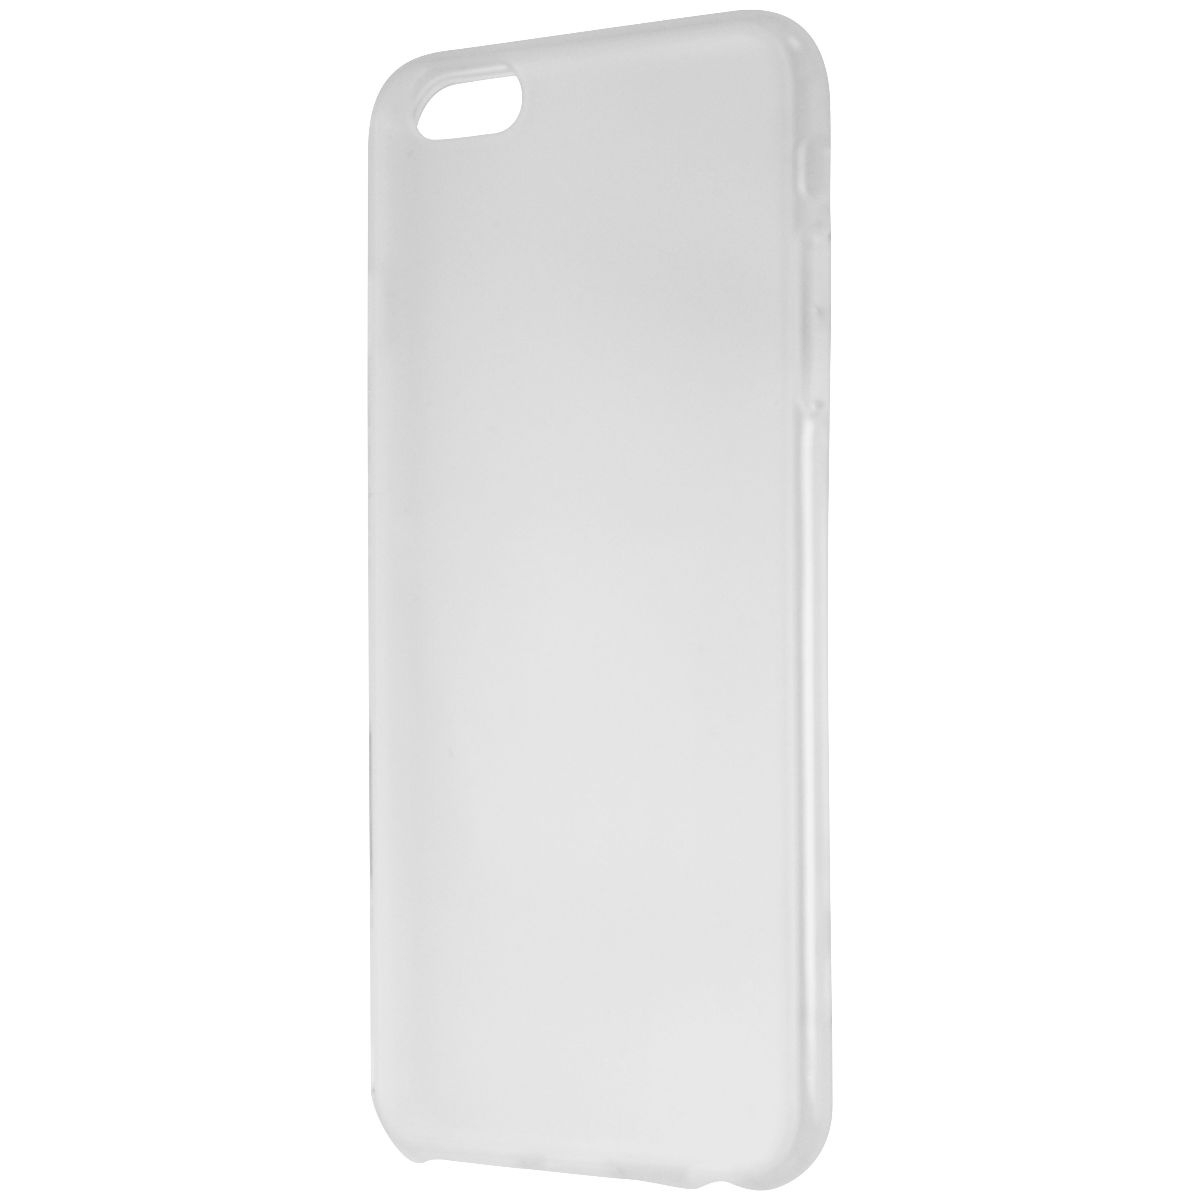 Avoca Mobile Pro Slim Gel Case For Apple IPhone 6s Plus & IPhone 6 Plus - Frost